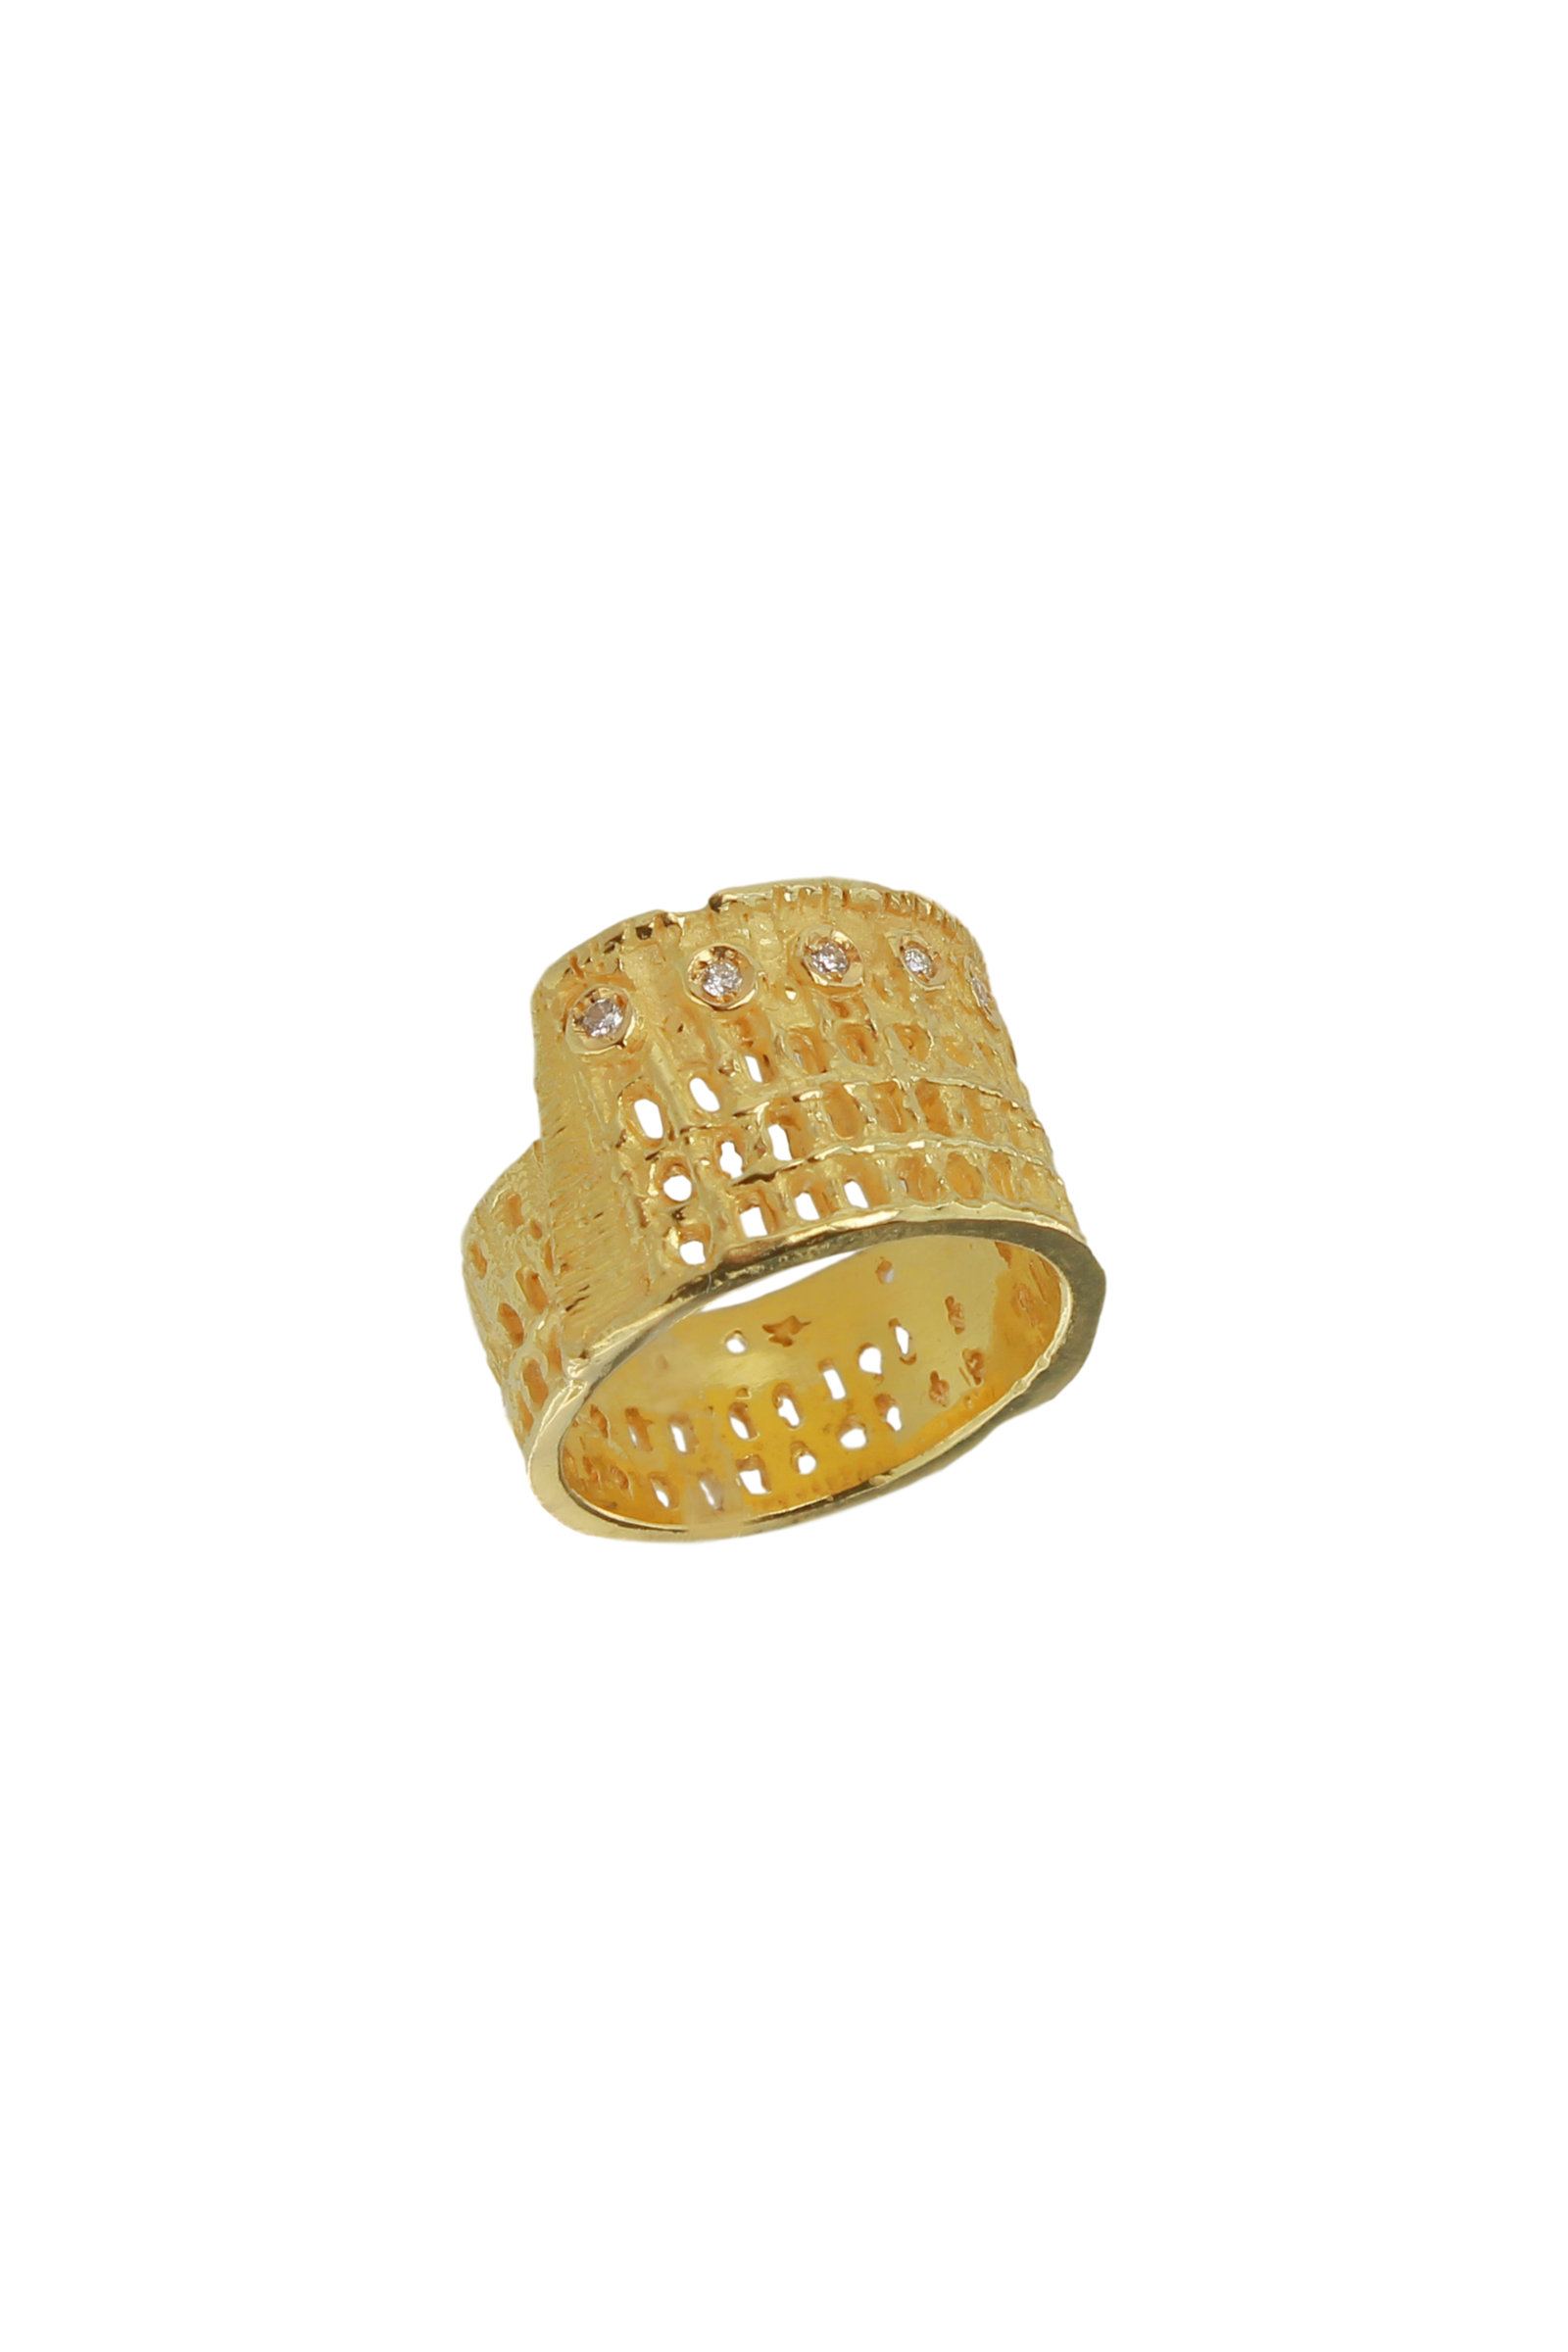 SE198E-18-Kt-Yellow-Gold-Collosseum-Ring-with-Diamonds-1